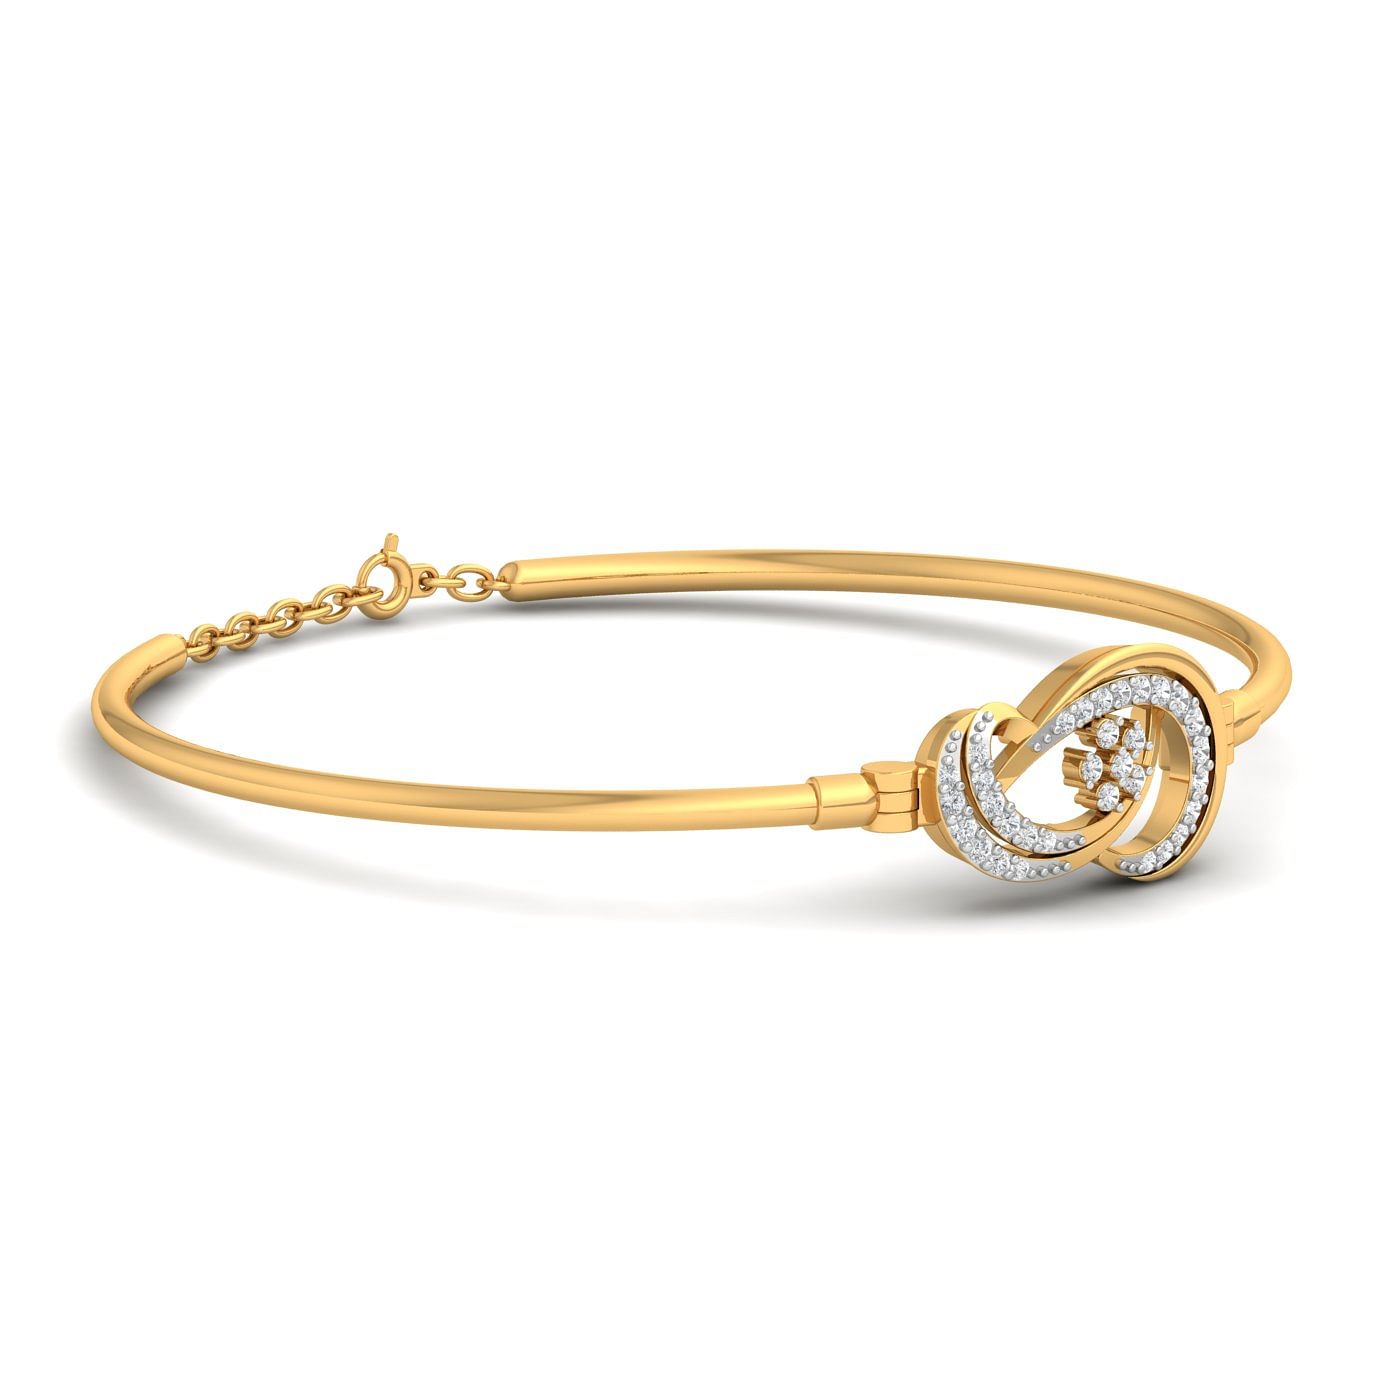 Yellow Gold Aubree Diamond Bracelet For Wedding Gift